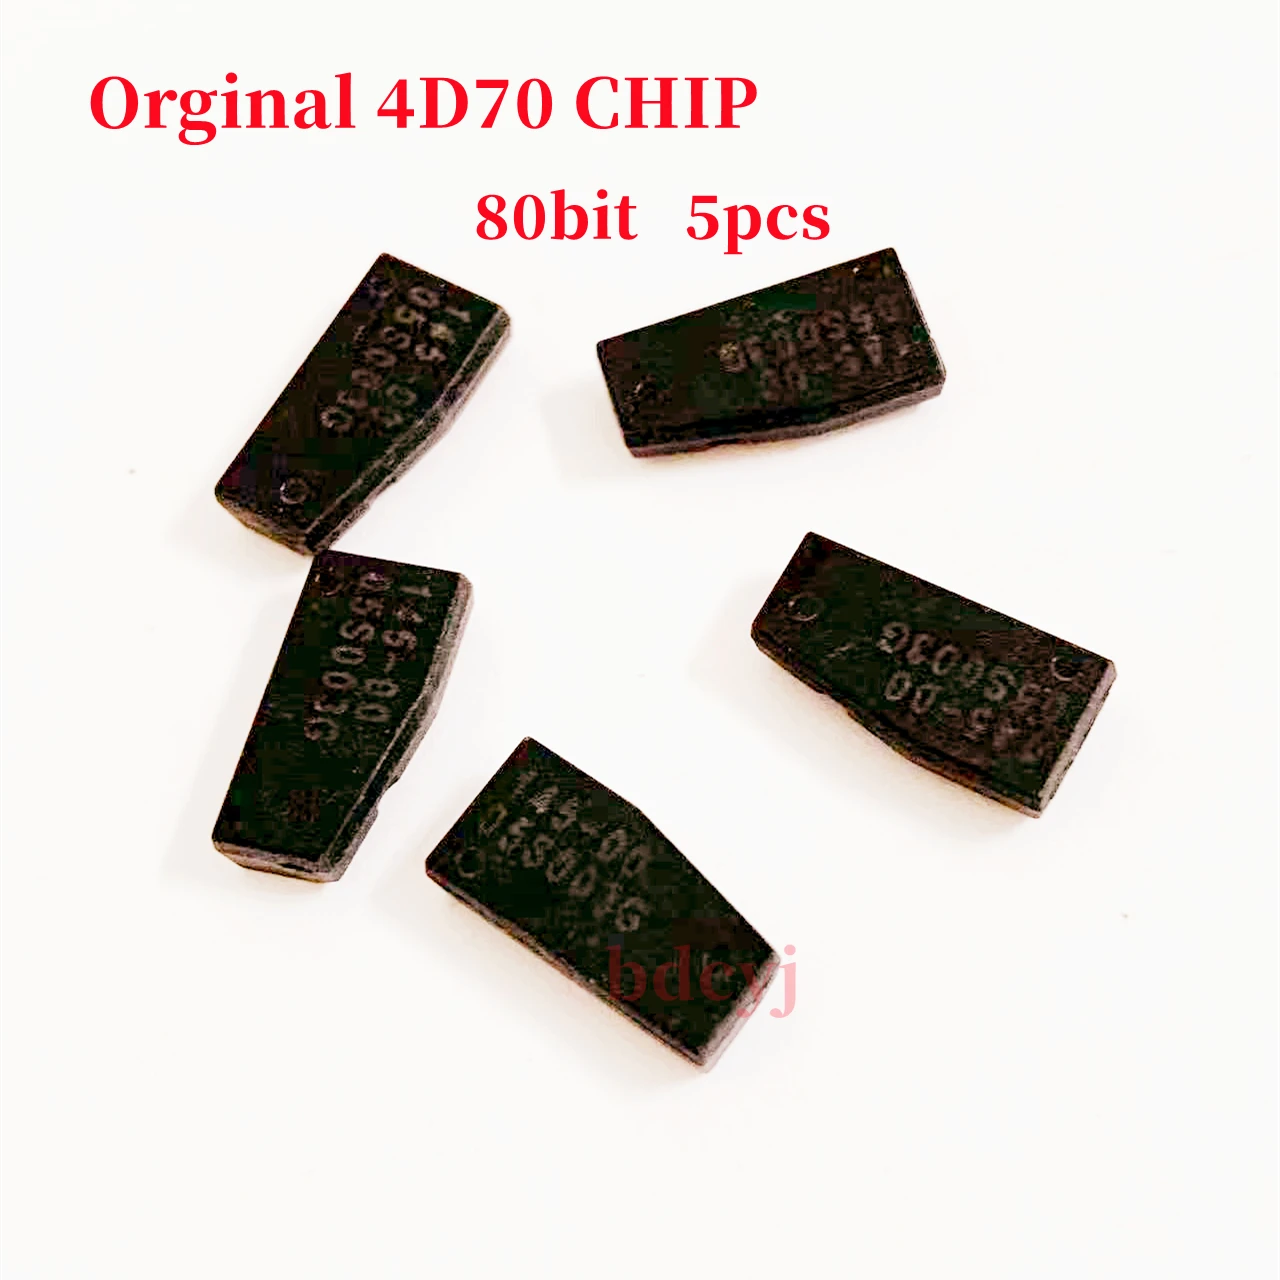 5pcs/lot CHIP 4D70 ID 70 80 bit Transponder chip 4D 70 DST40 chip Car Ke... - $645.70